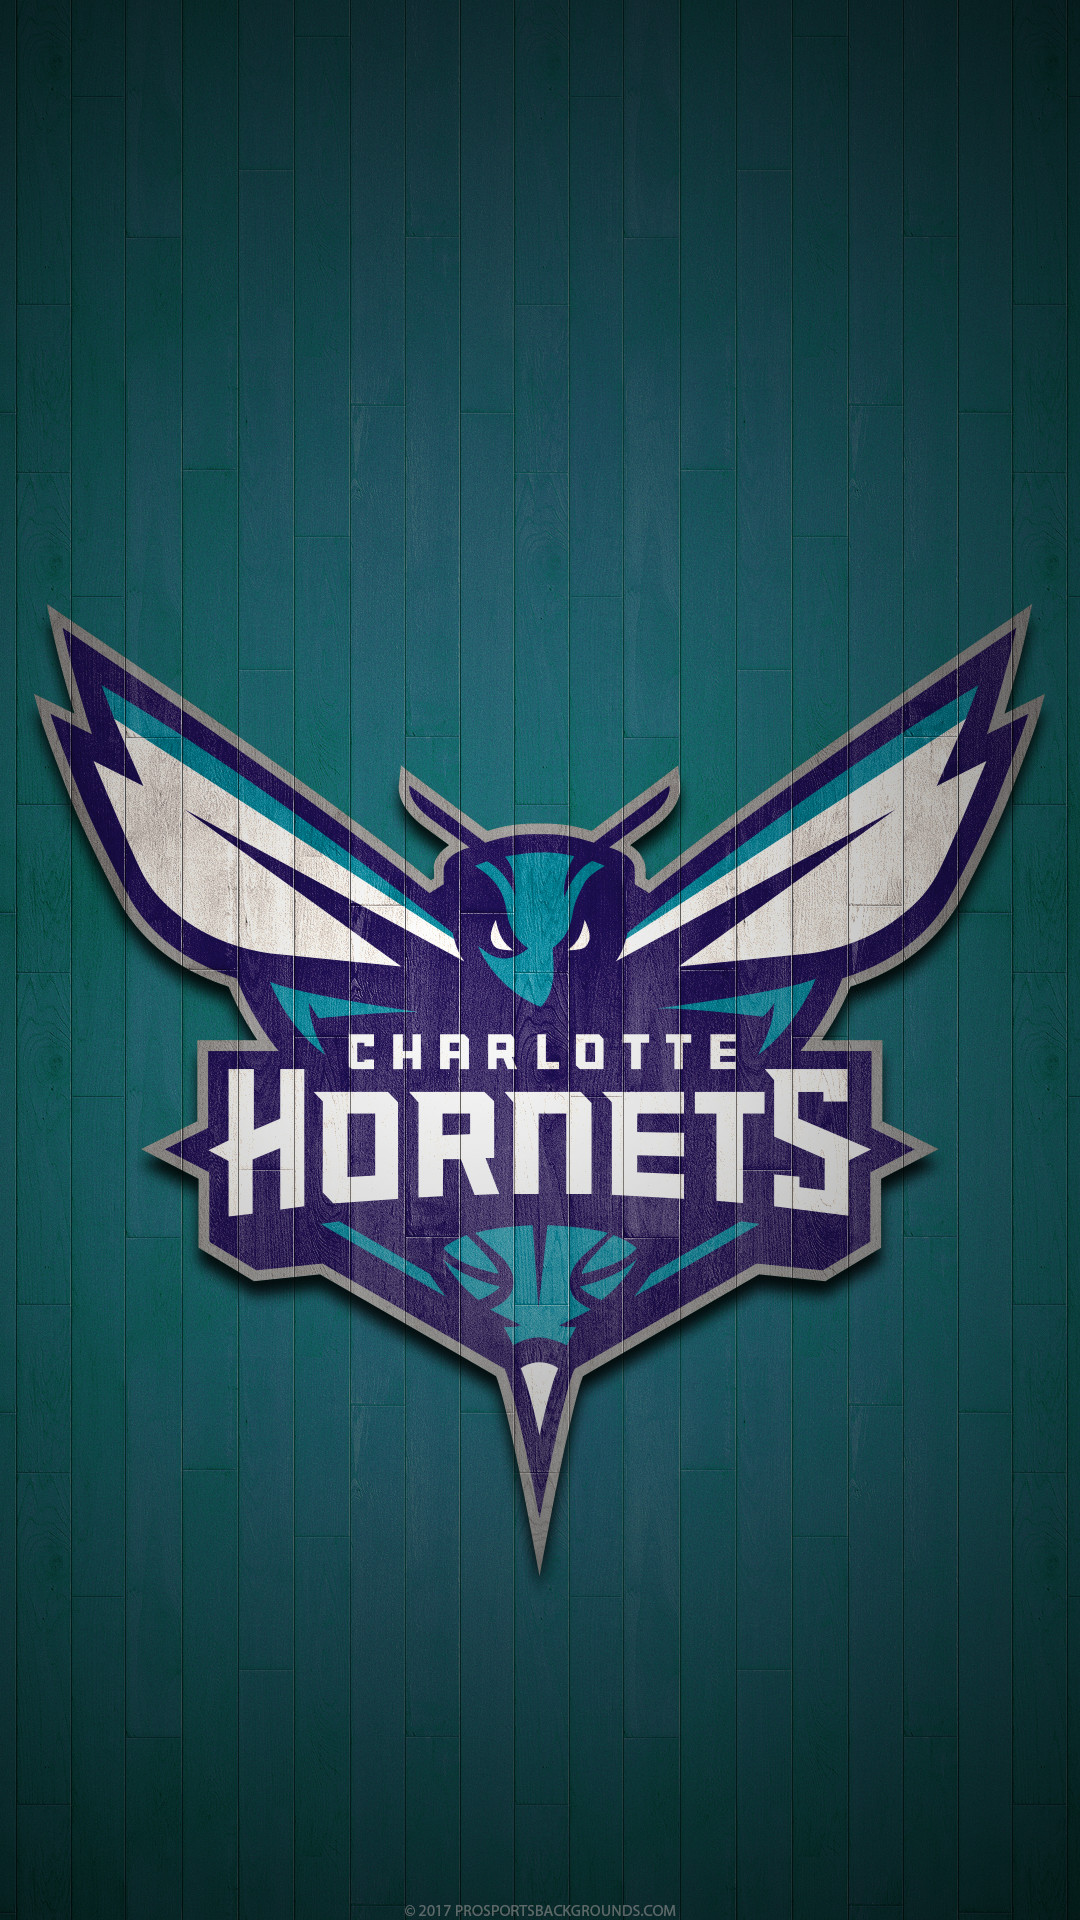 1080x1920 Charlotte Hornets 2017 schedule hardwood nba basketball logo wallpaper free  iphone 5, 6, ...